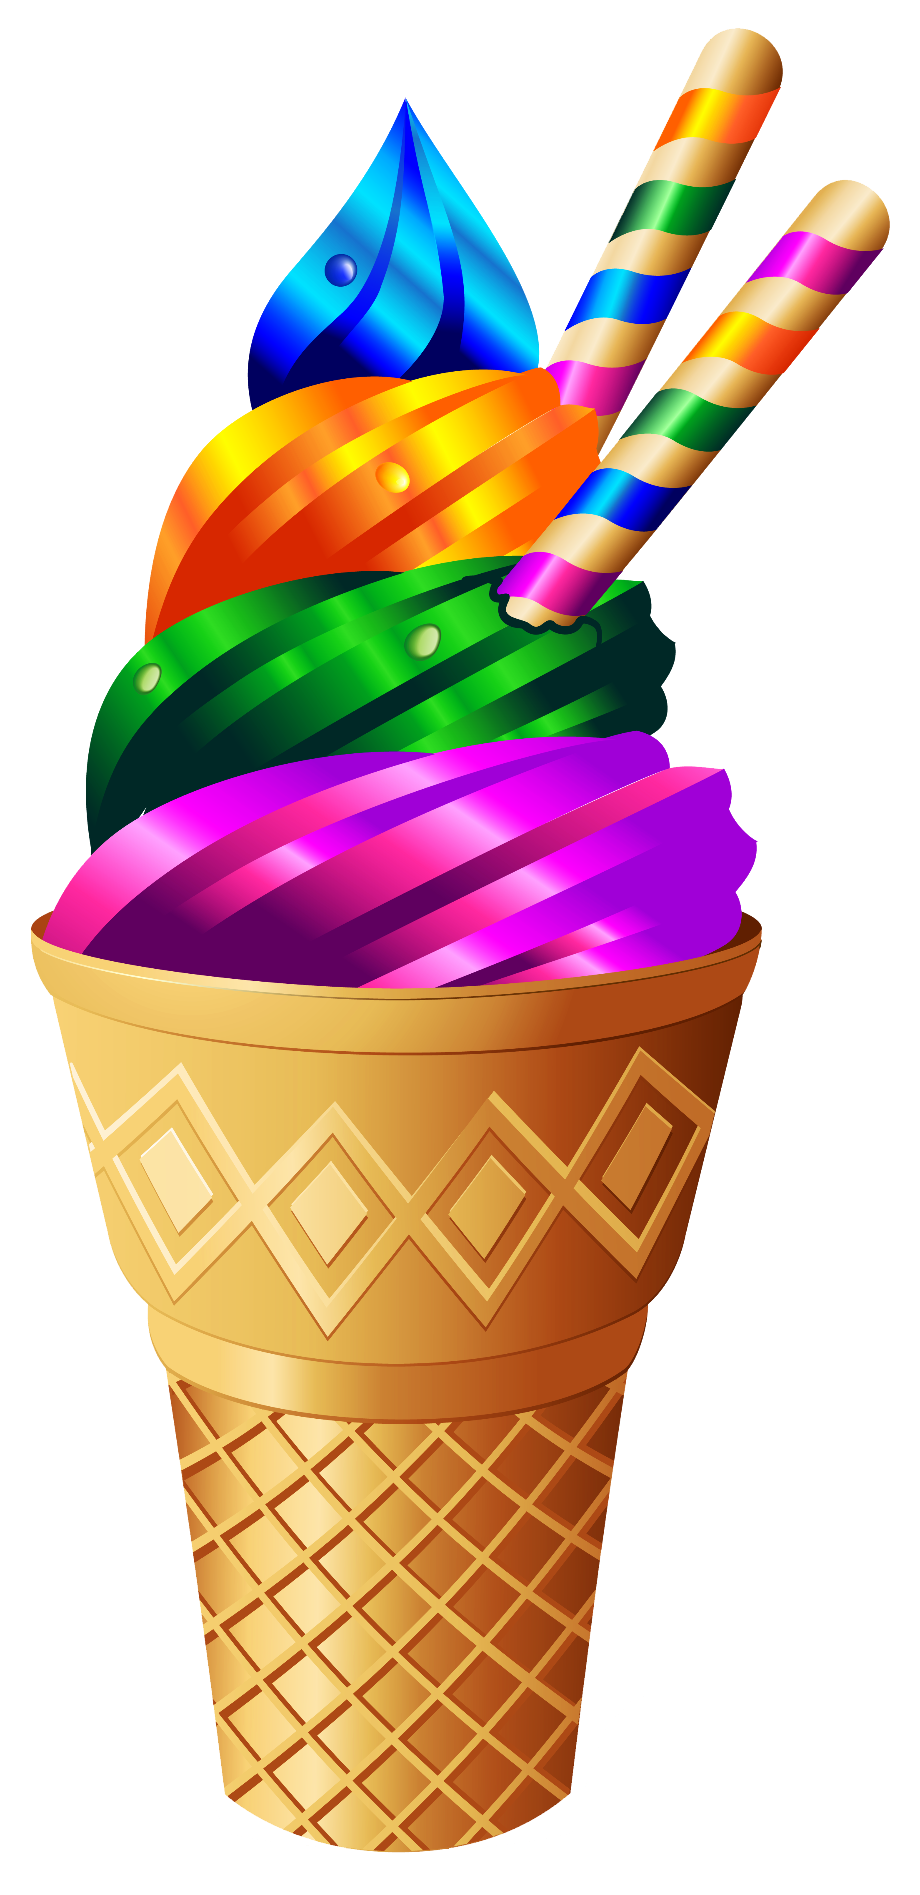 ice cream cone clipart rainbow